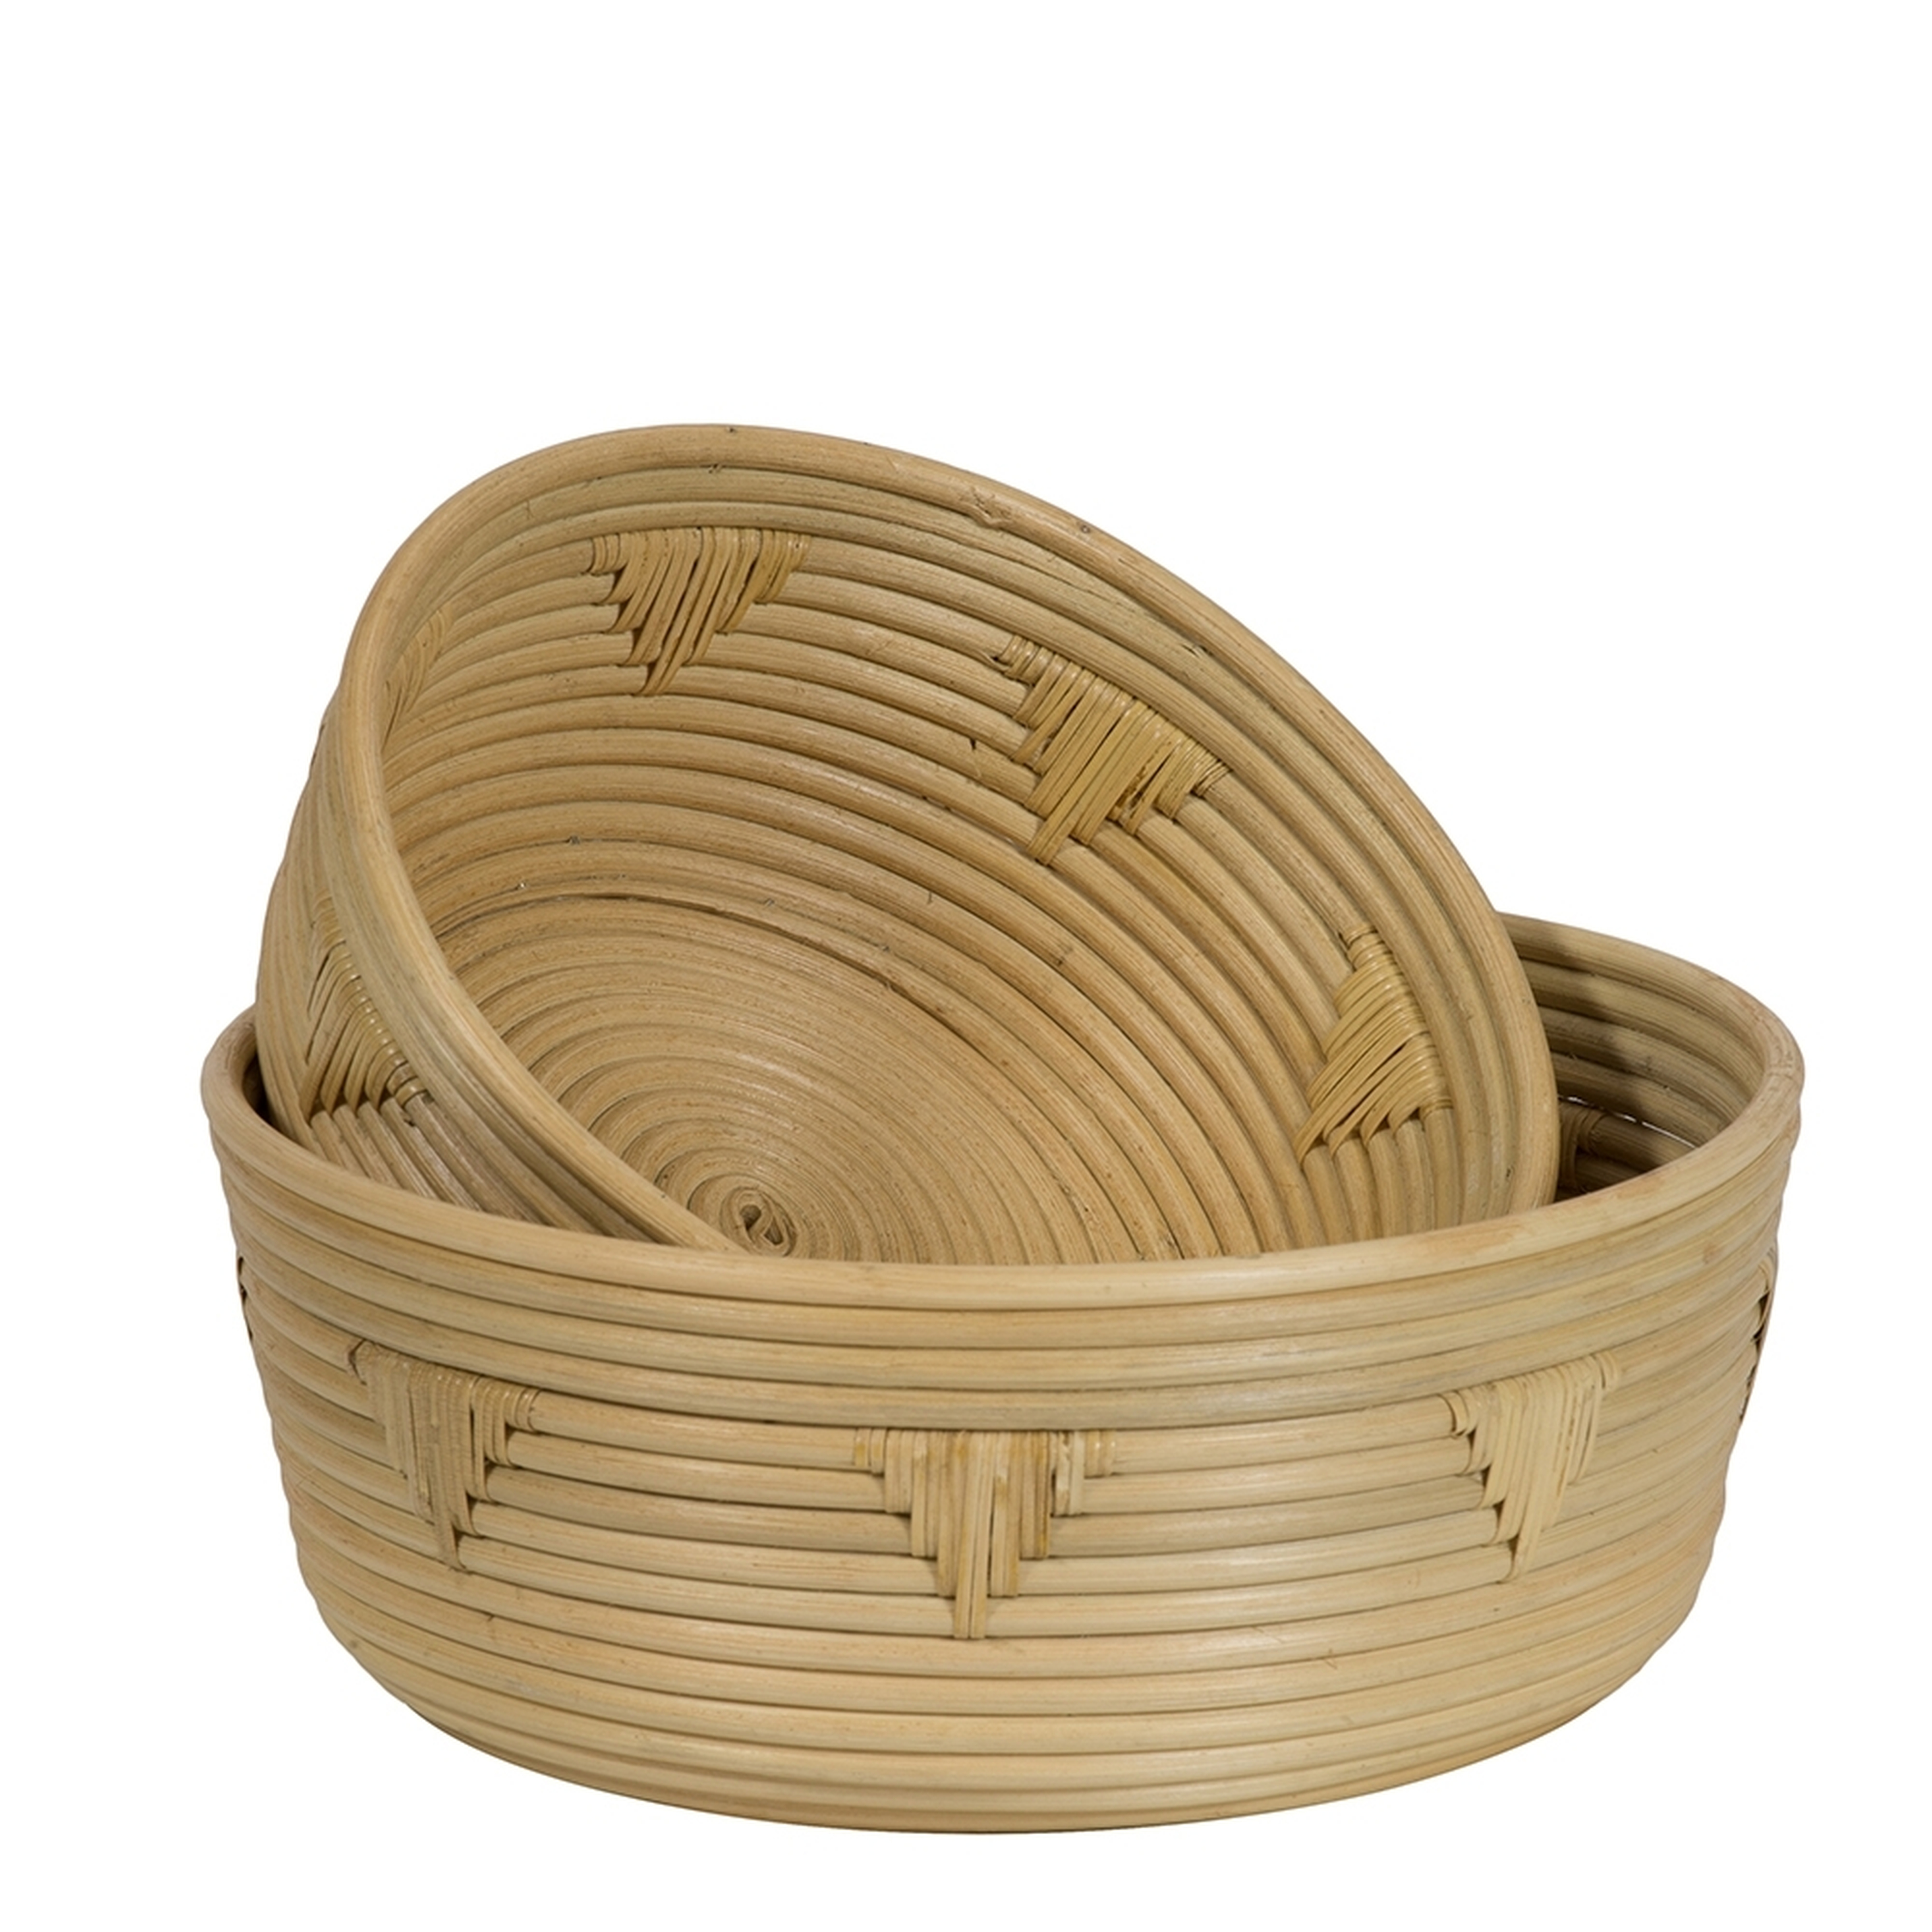 Theyla Nesting Baskets - Lulu and Georgia